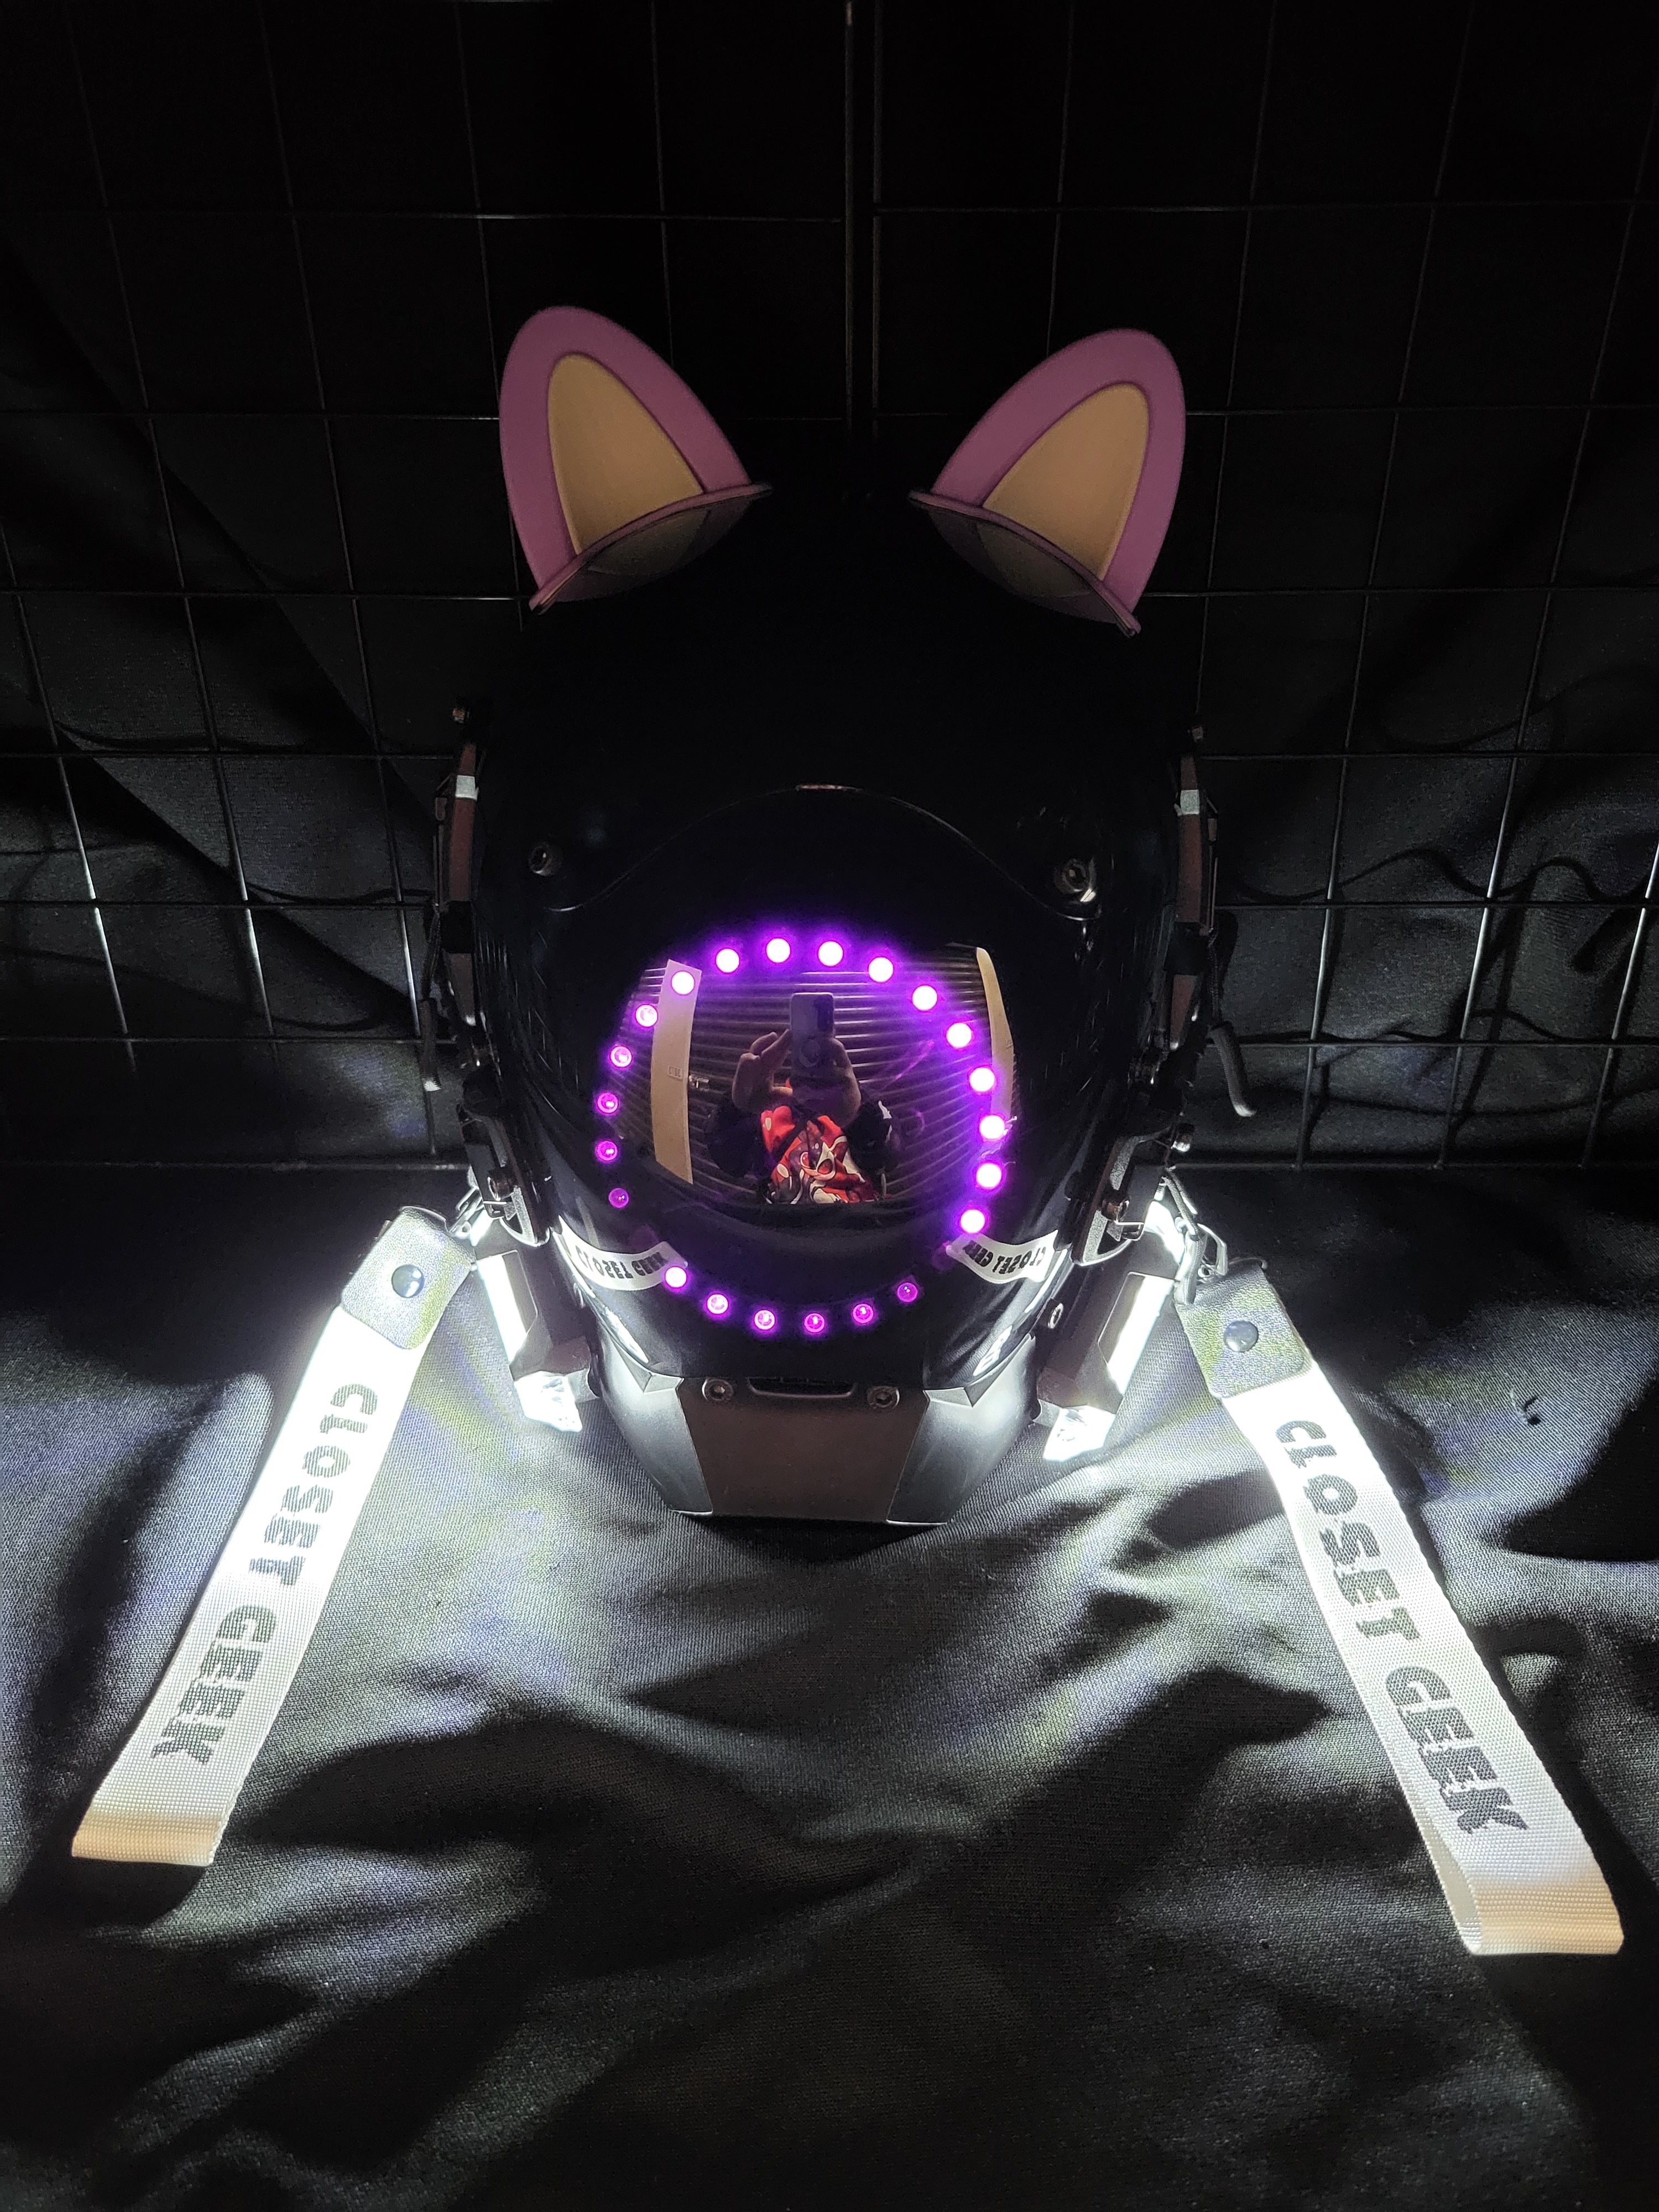 L.e.d cyber helmet with cat ears